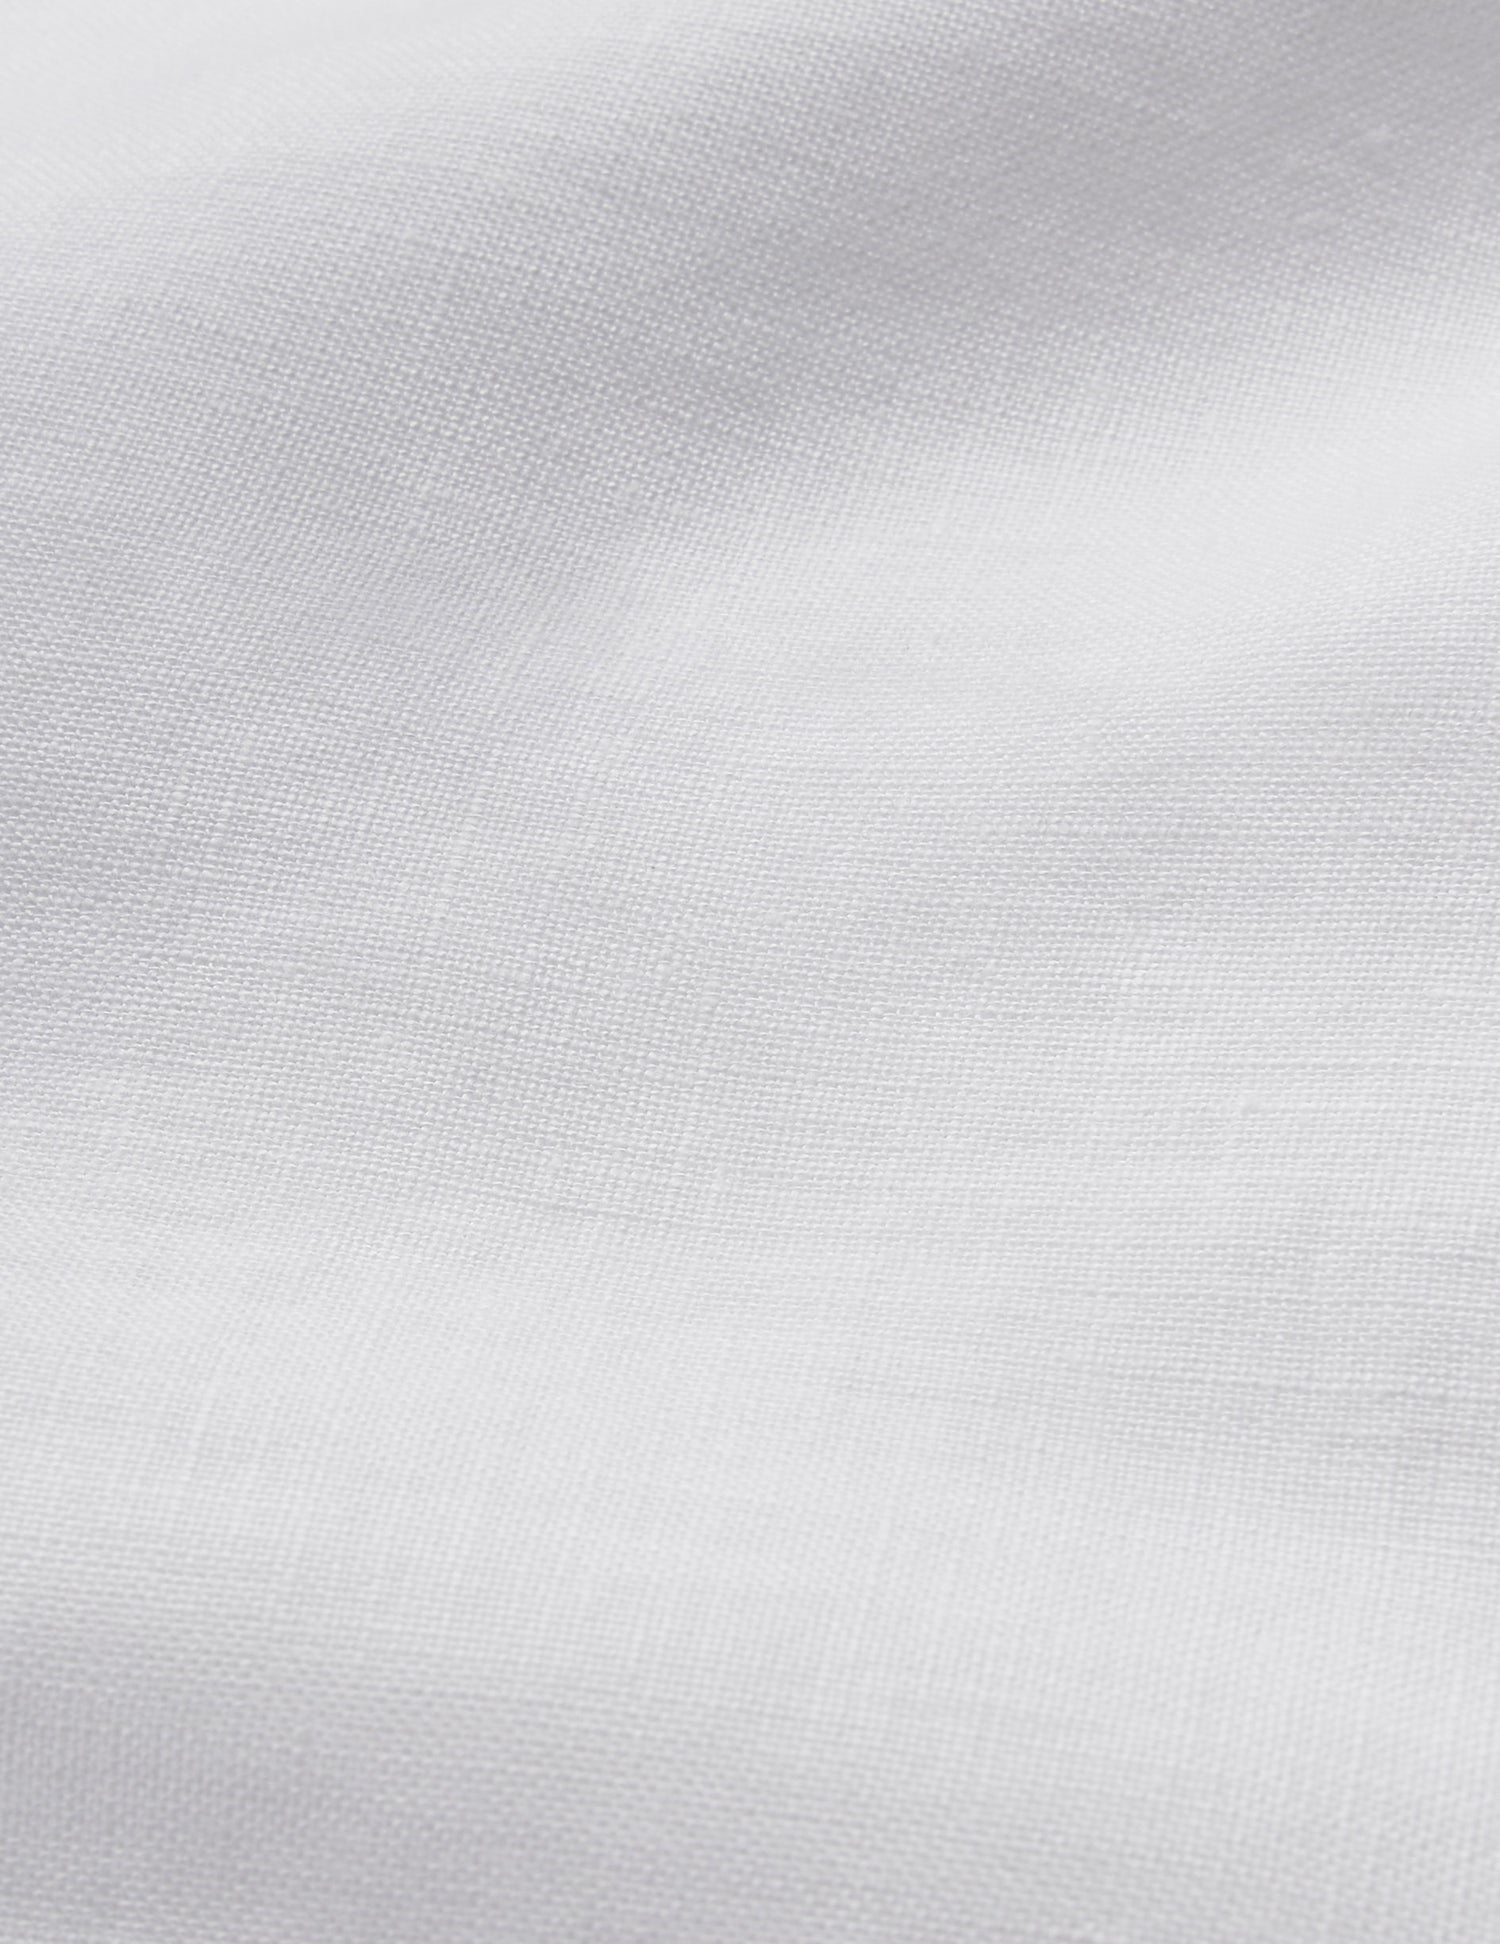 Aristote shirt in white linen - Linen - Italian Collar#4